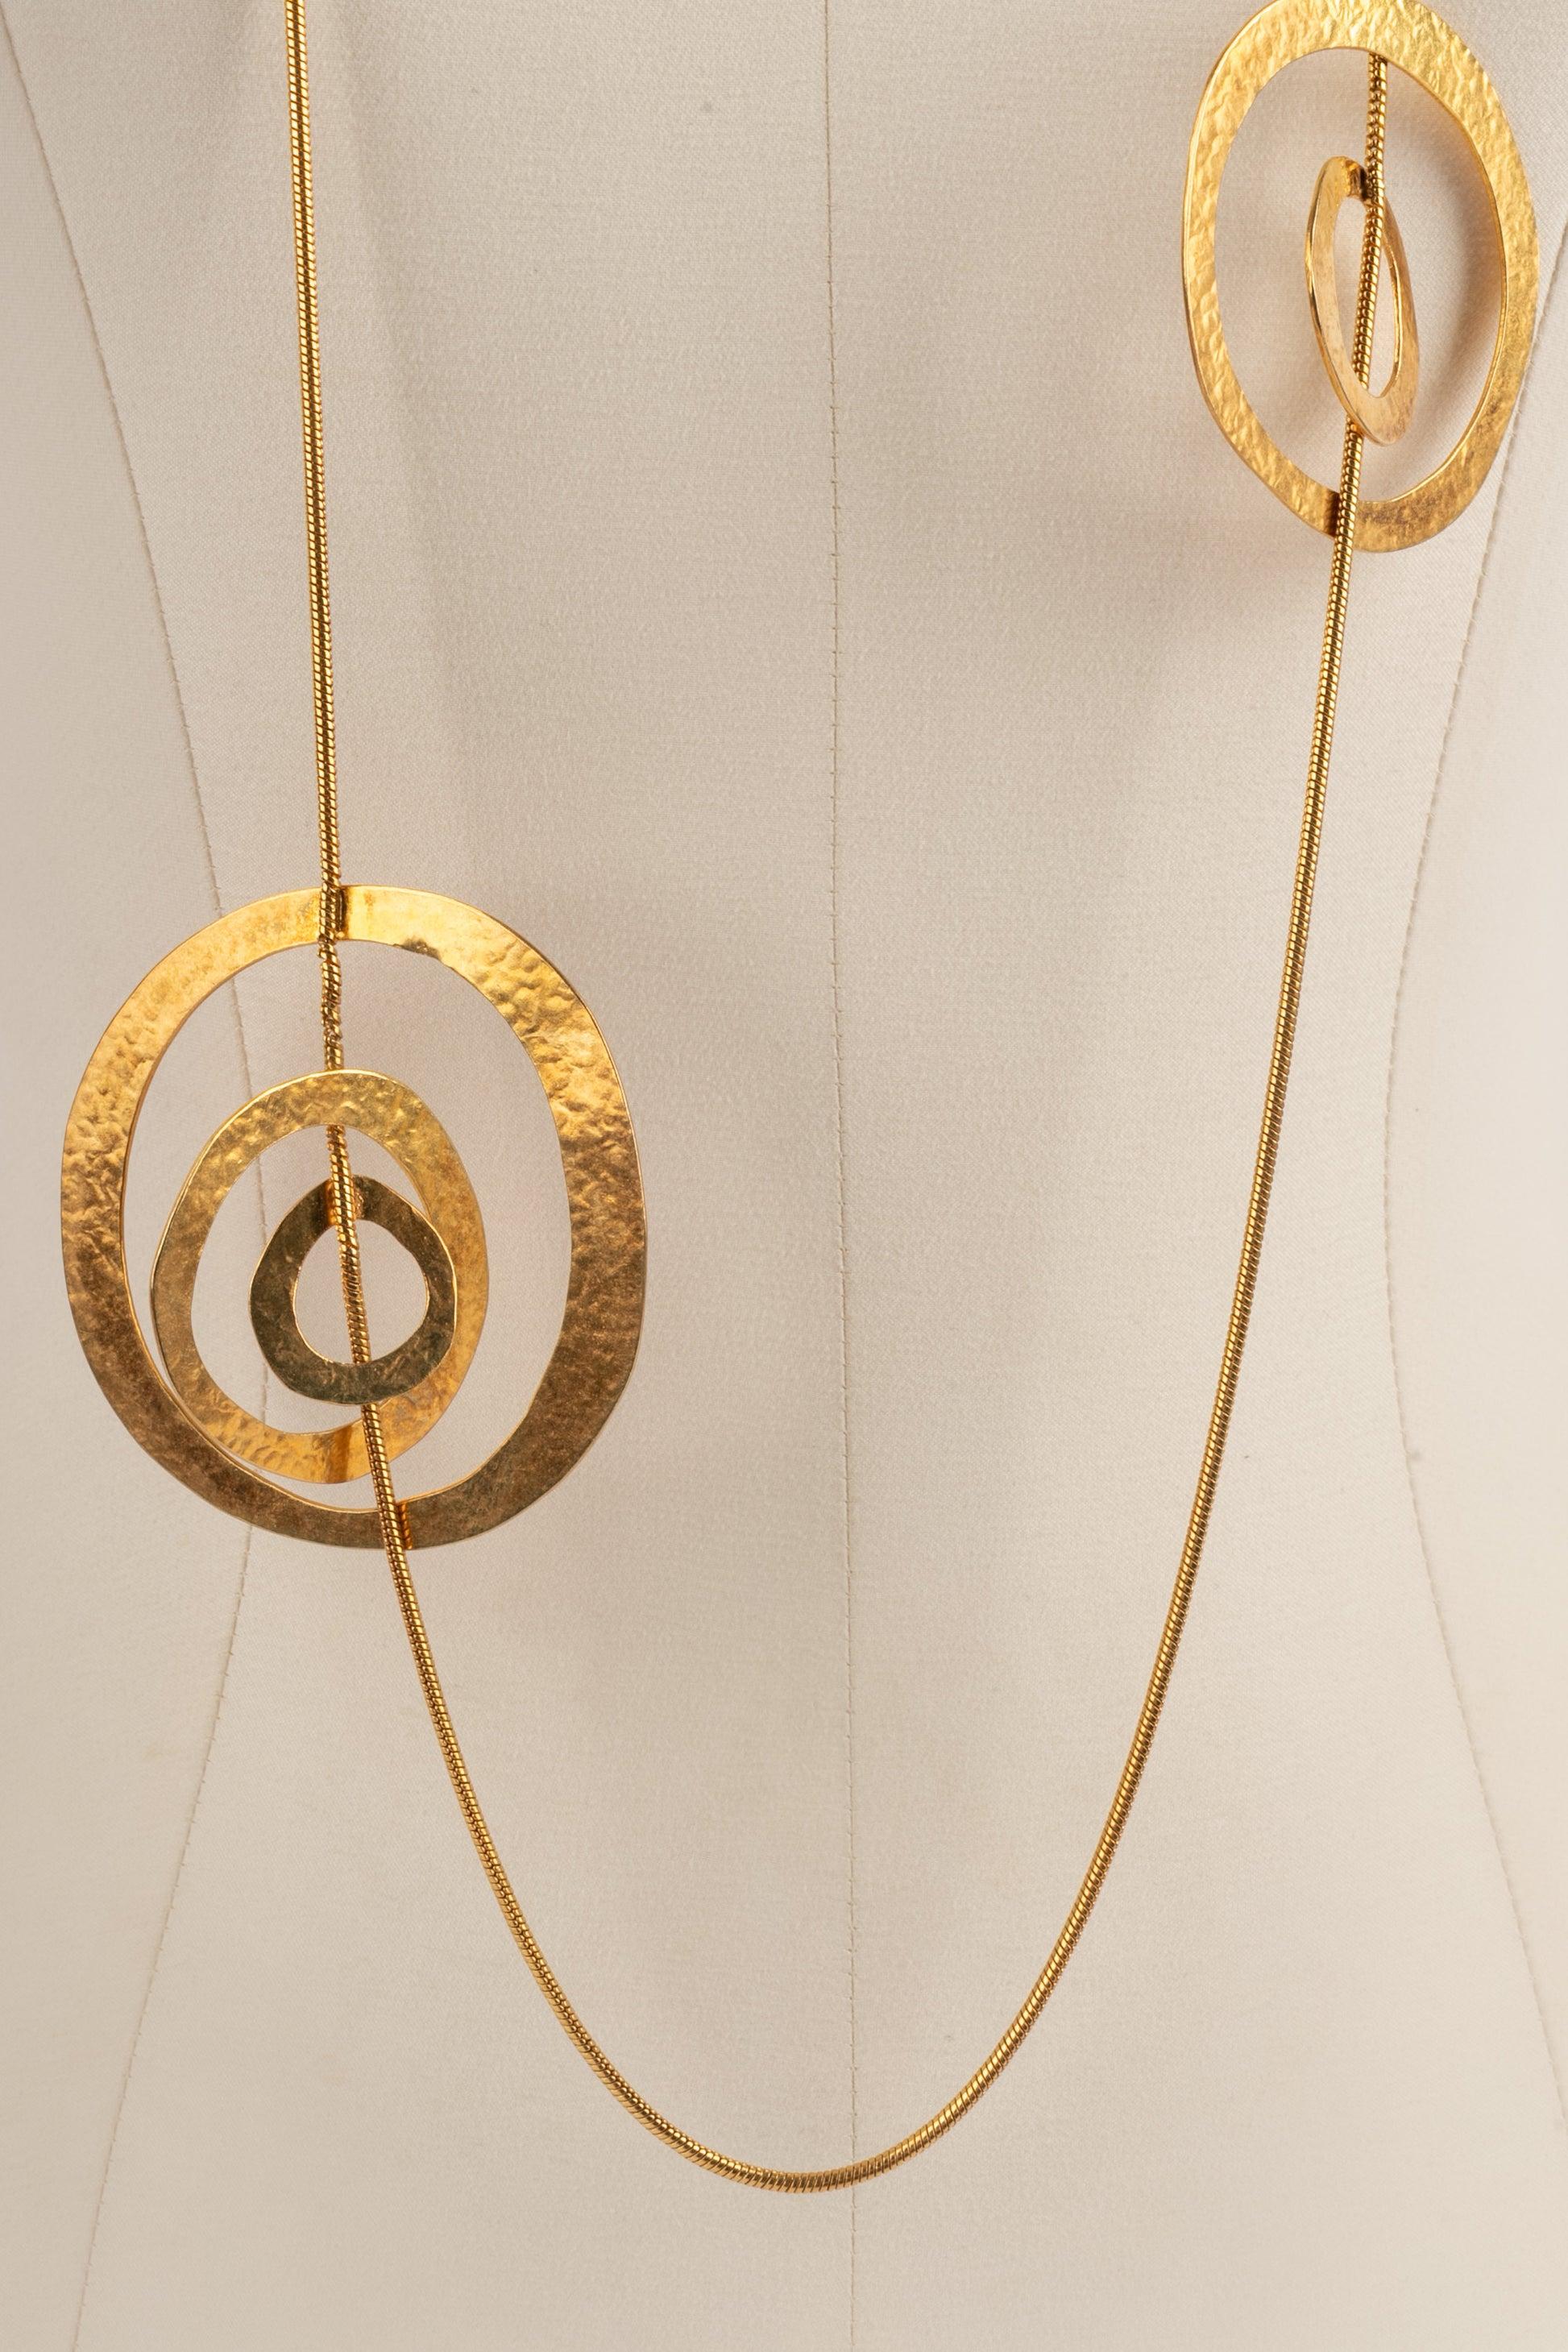 Van Der Straeten Golden Beaten Brass Necklace, 2000s For Sale 4